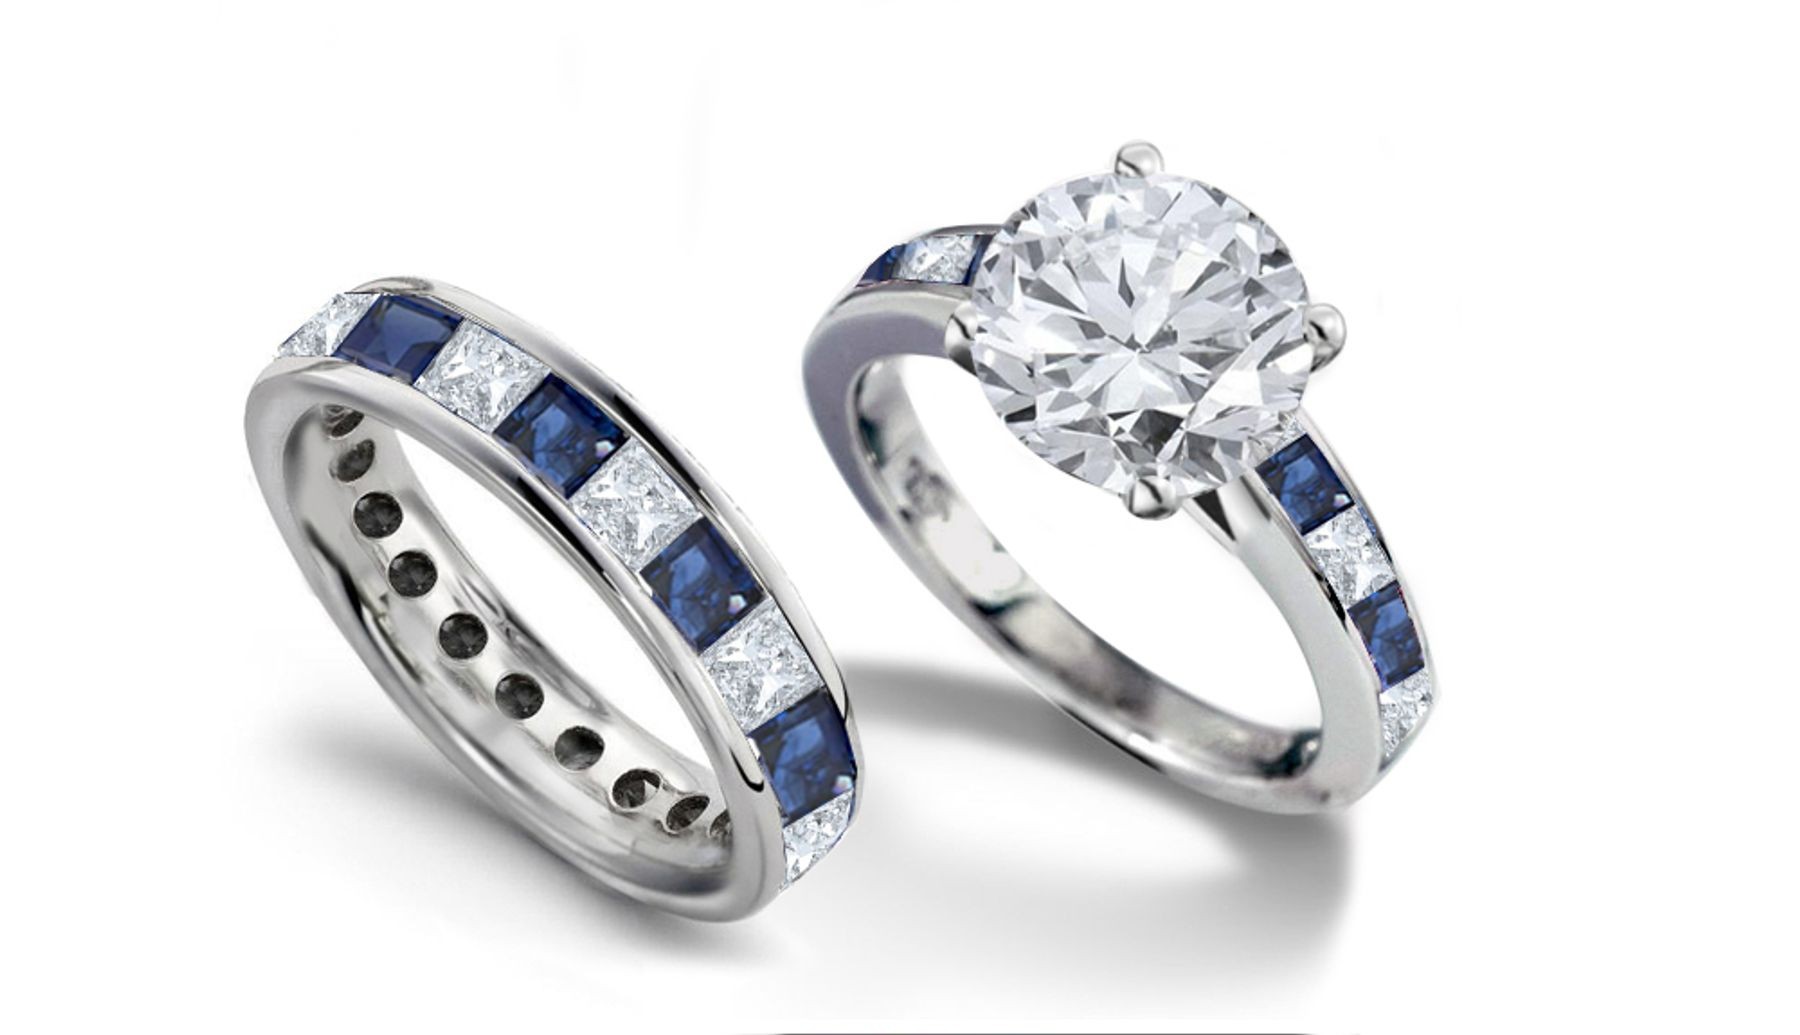 Brilliant Cut Round Diamond & Princess Cut Diamond Engagement Ring & Matching Wedding Band in Platinum